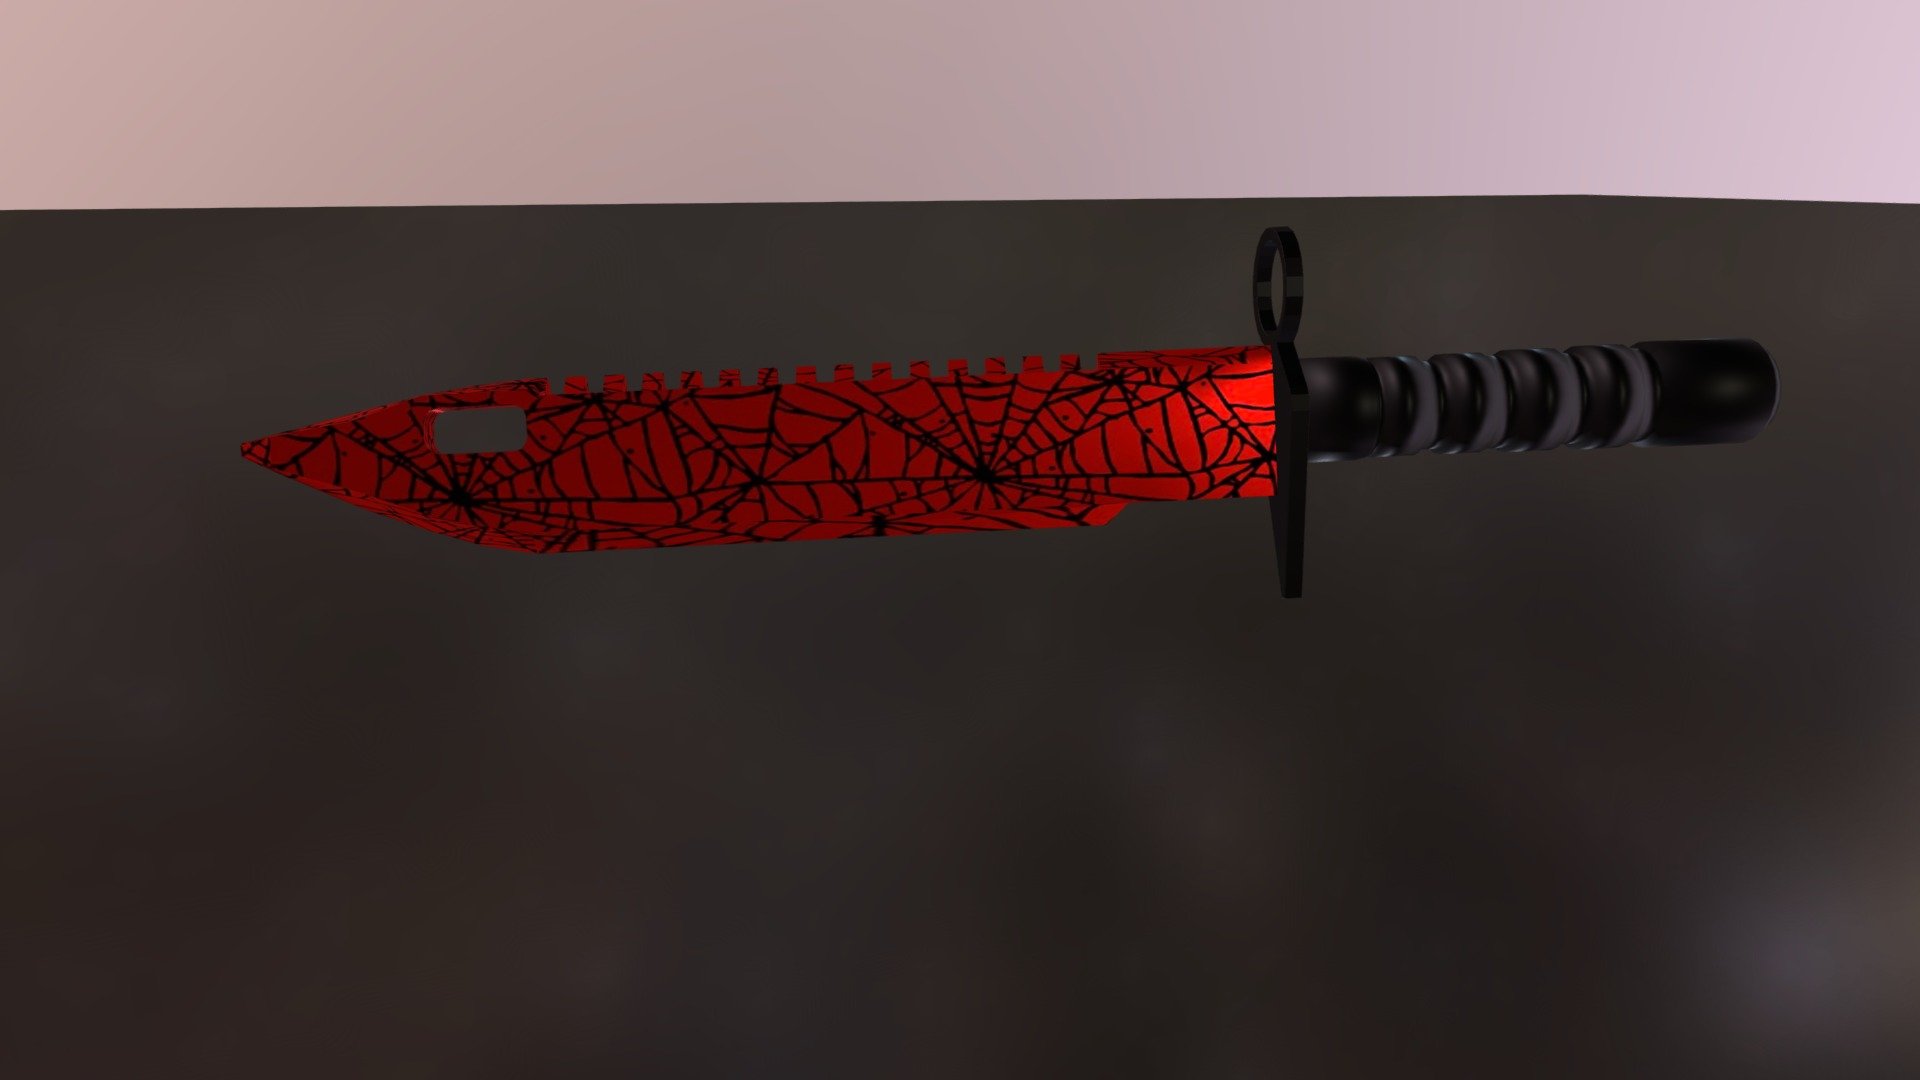 Bayonet-knife  skin: bloody web